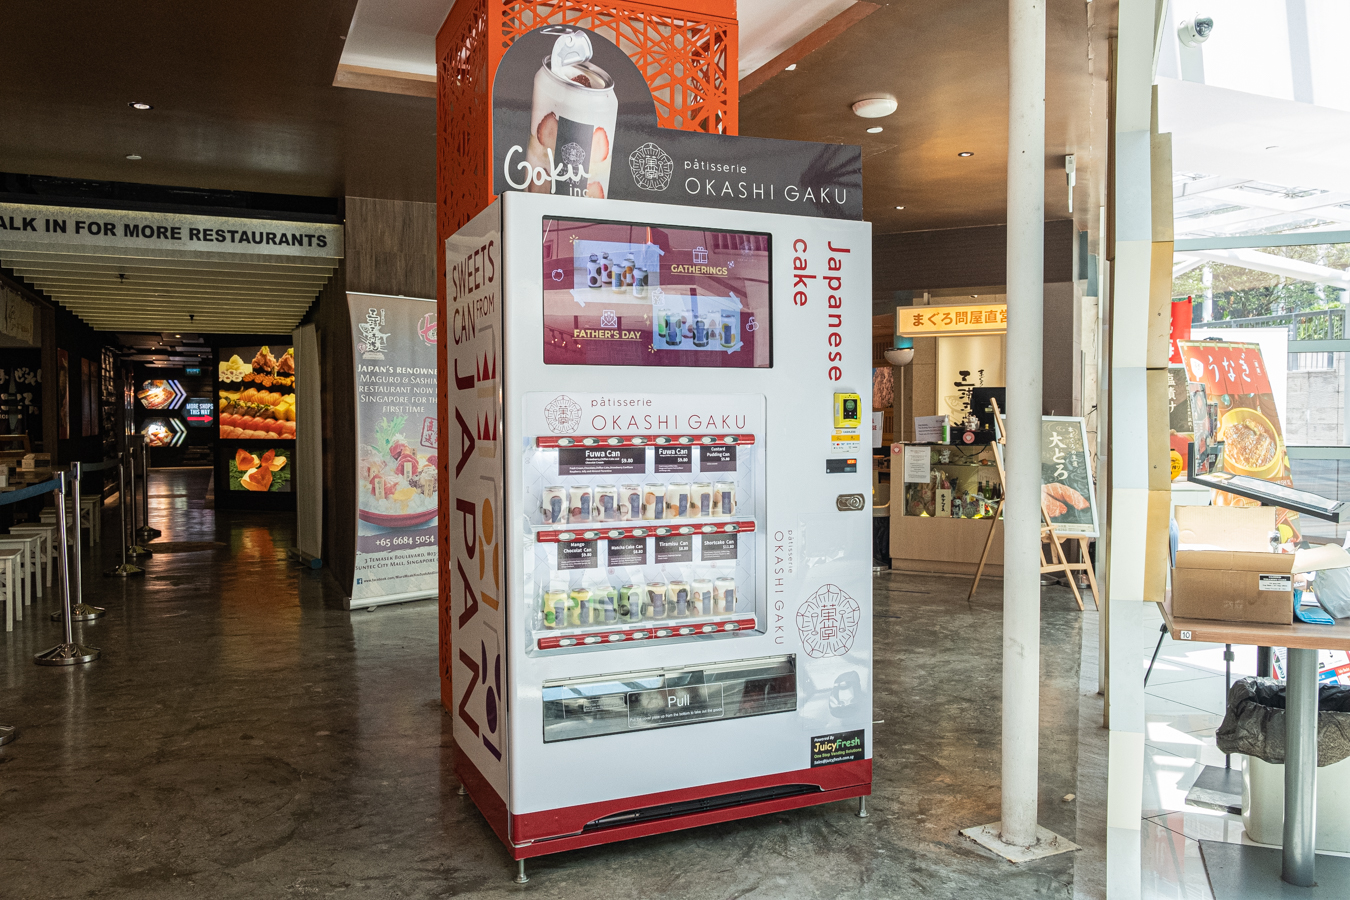 The Okashi Gaku Cake-In-A-Can Vending Machine in Suntec City